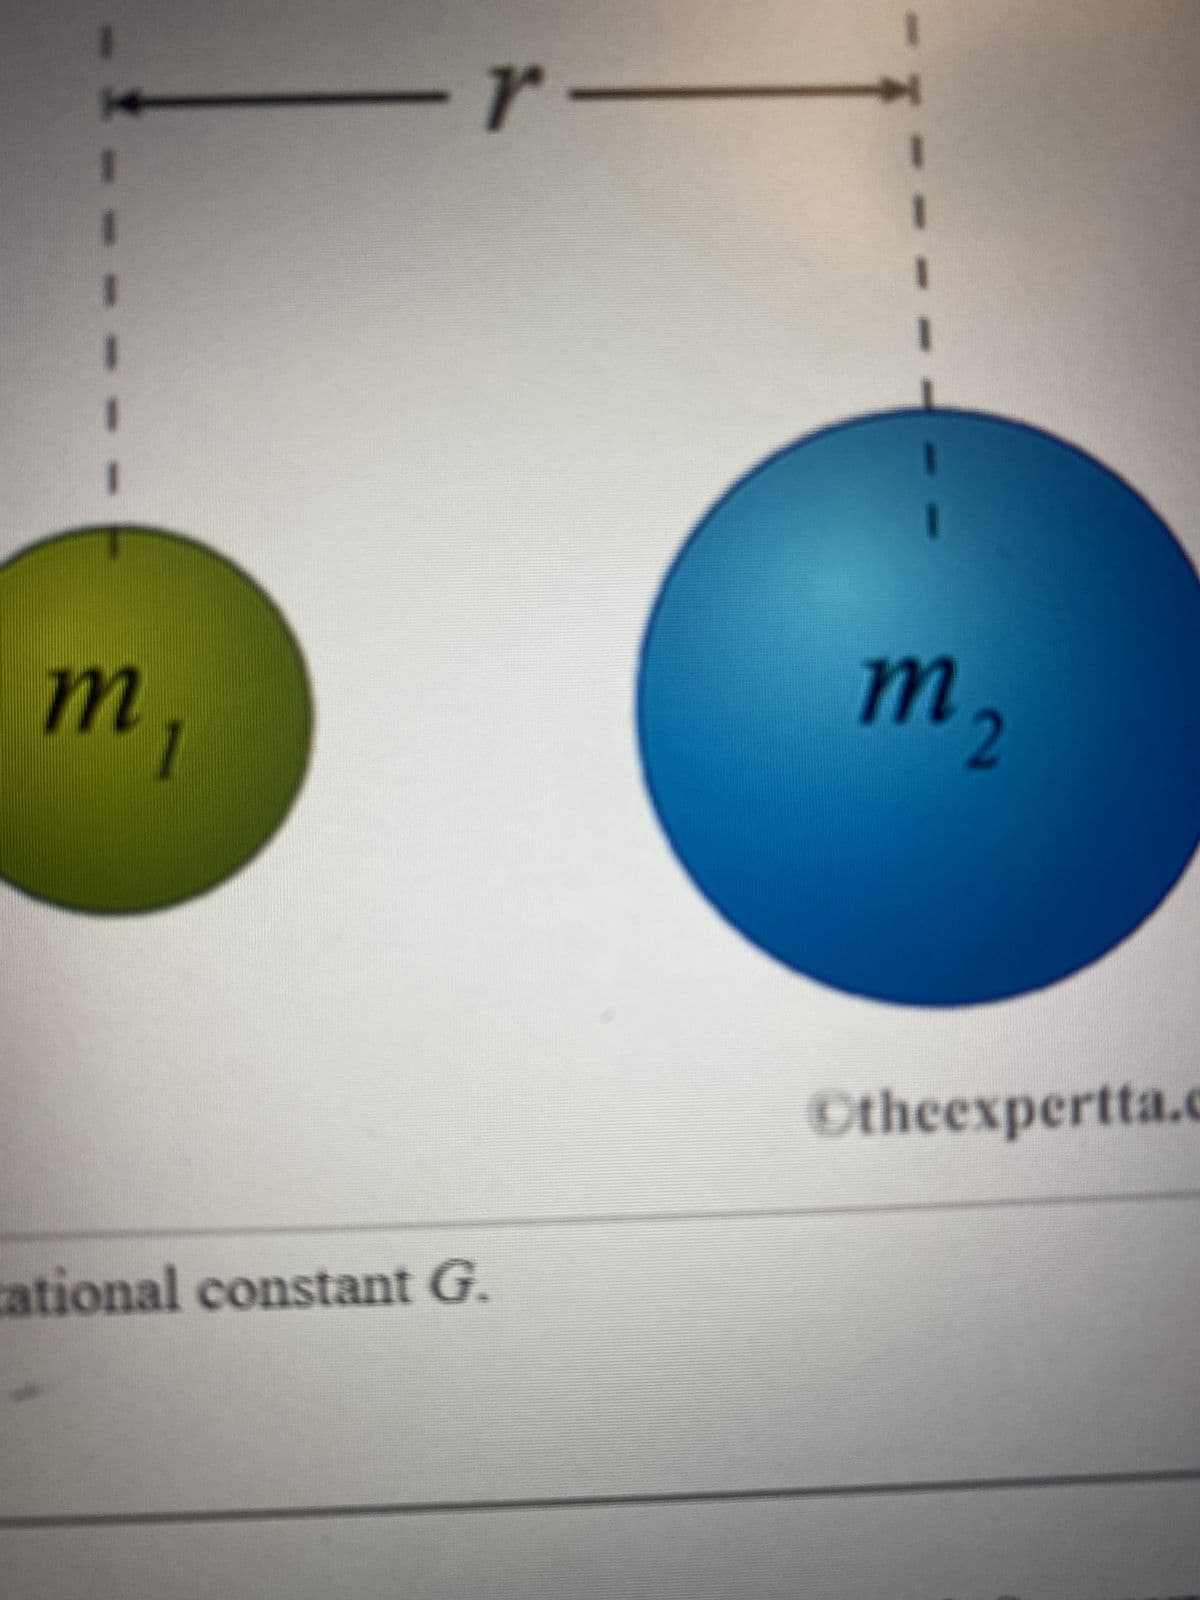 m₁
r-
tational constant G.
m 2
Otheexpertta.c